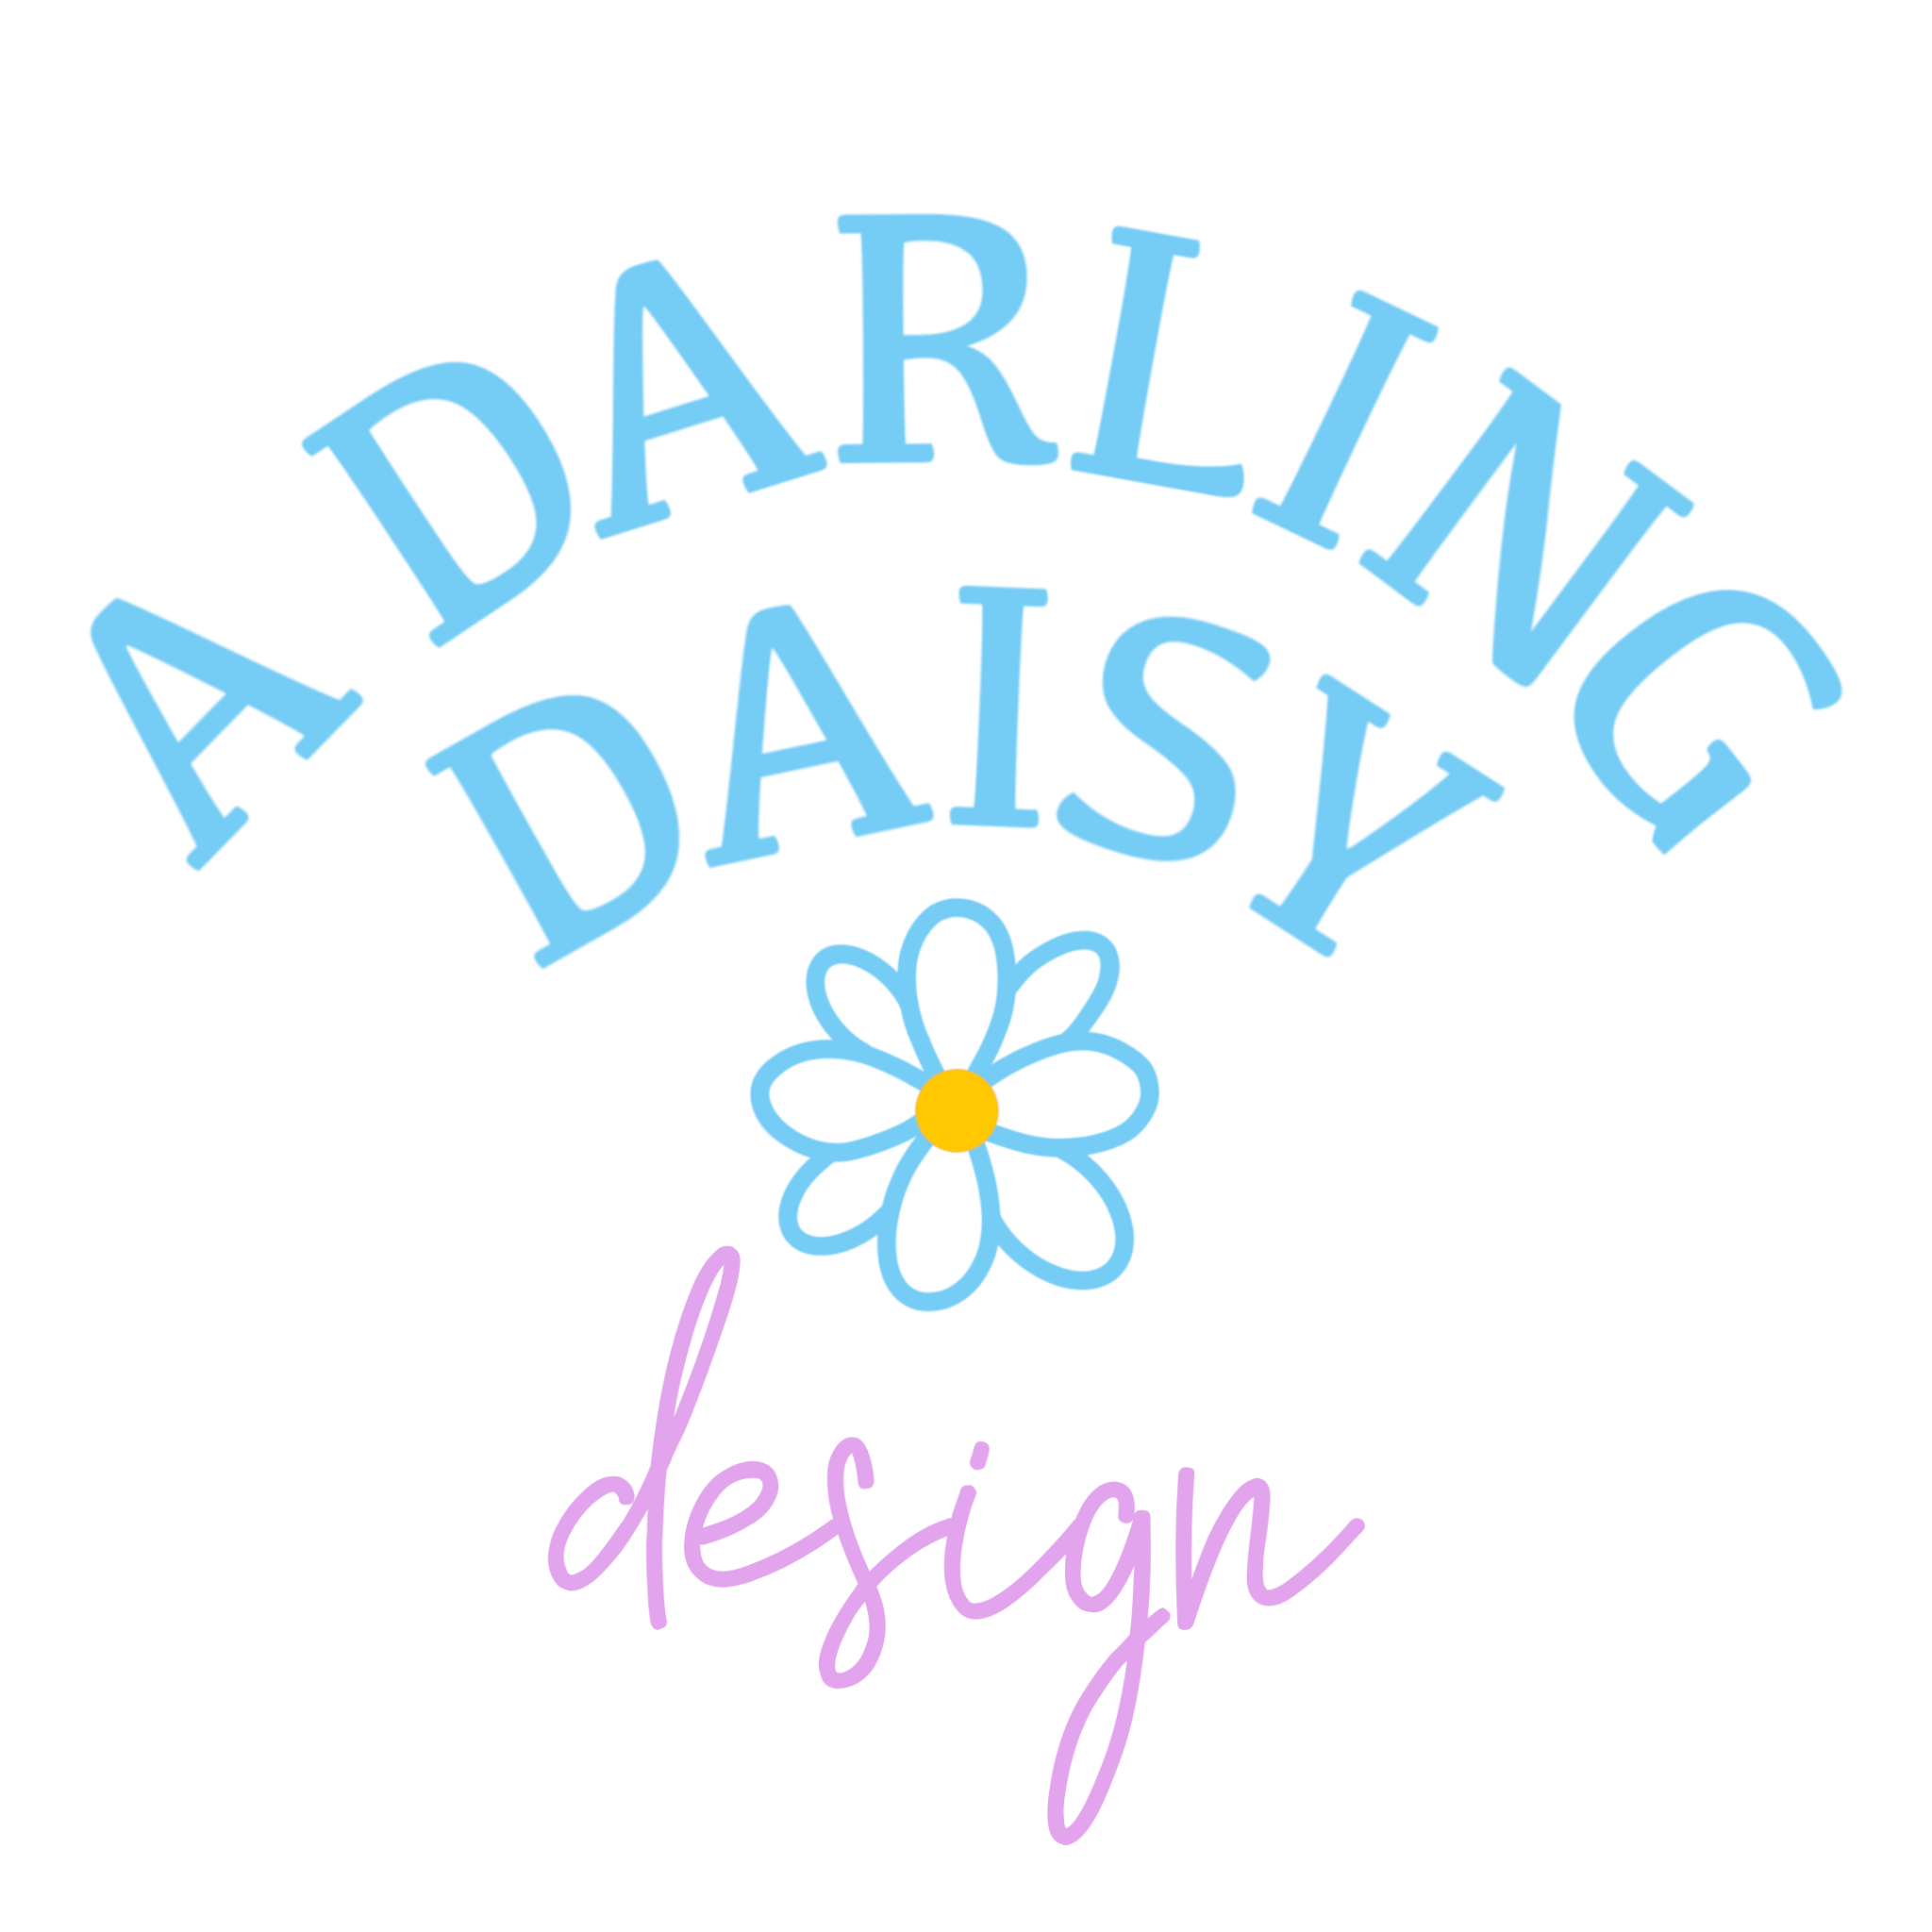 A Darling Daisy Design